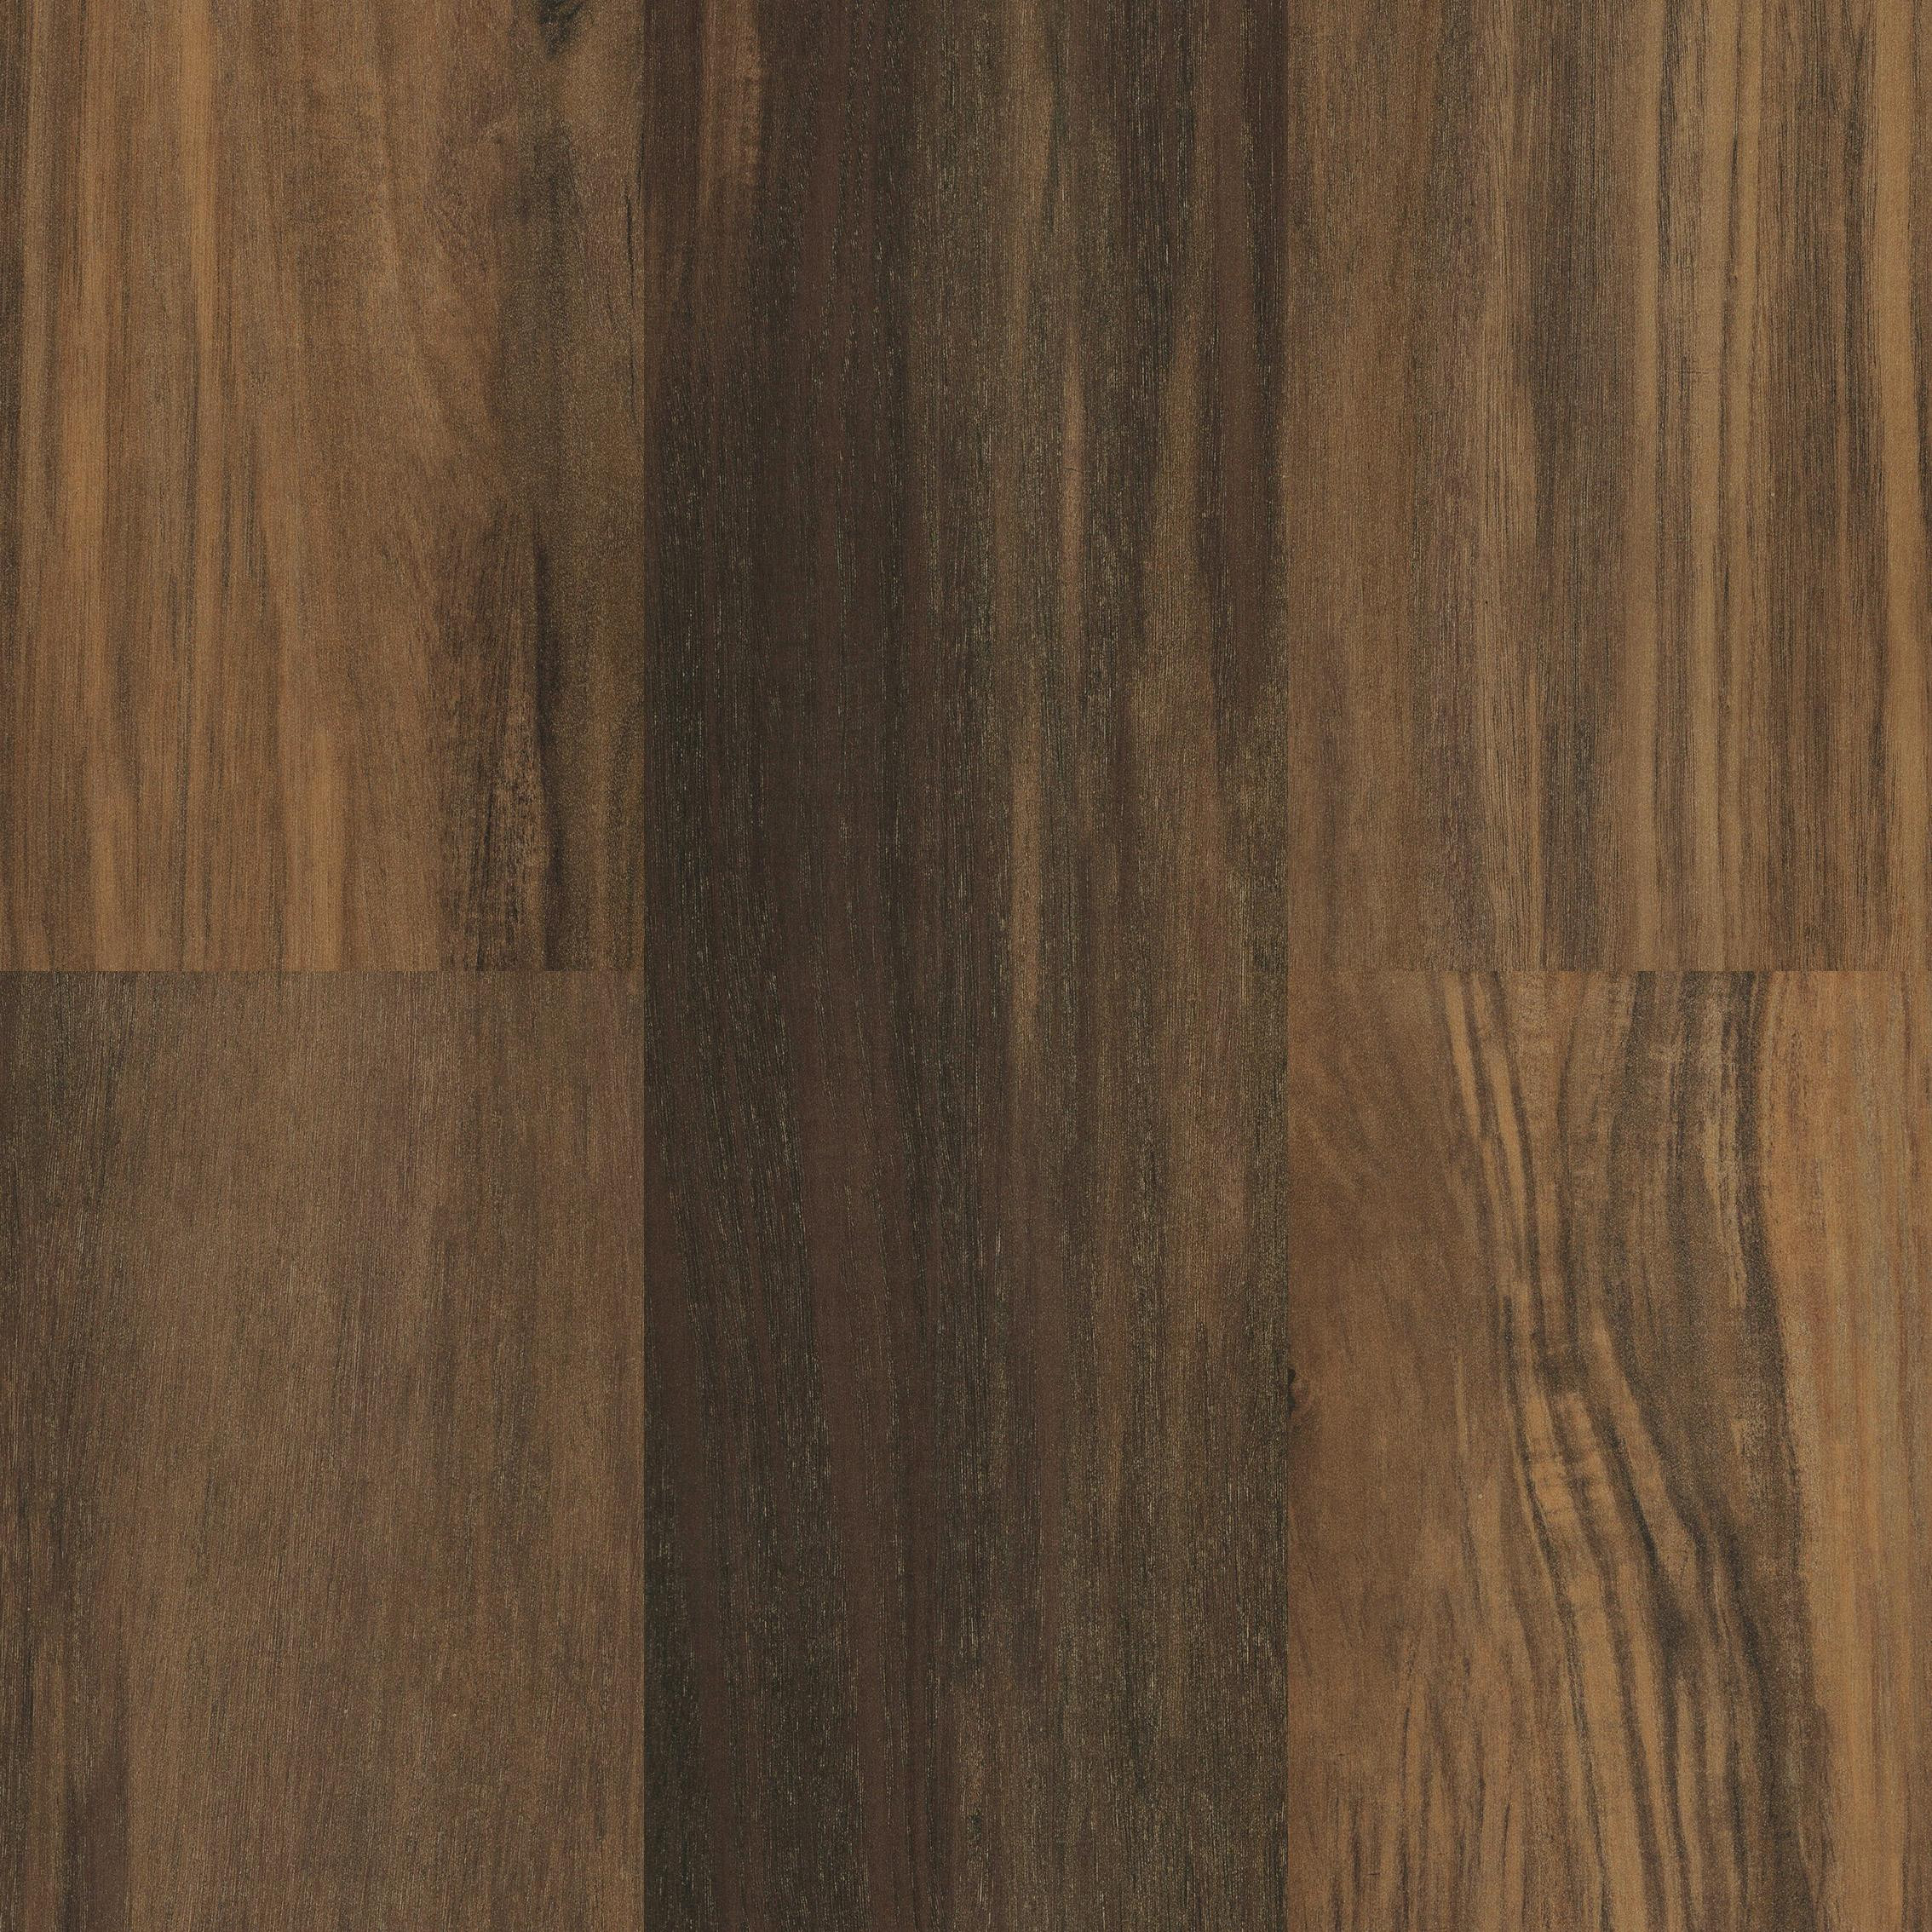 acacia hardwood flooring manufacturers of moduleo horizon sculpted acacia 7 56 luxury vinyl plank flooring 60142 pertaining to moduleo vision sculpted acacia 7 56 wide waterproof luxury vinyl plank flooring